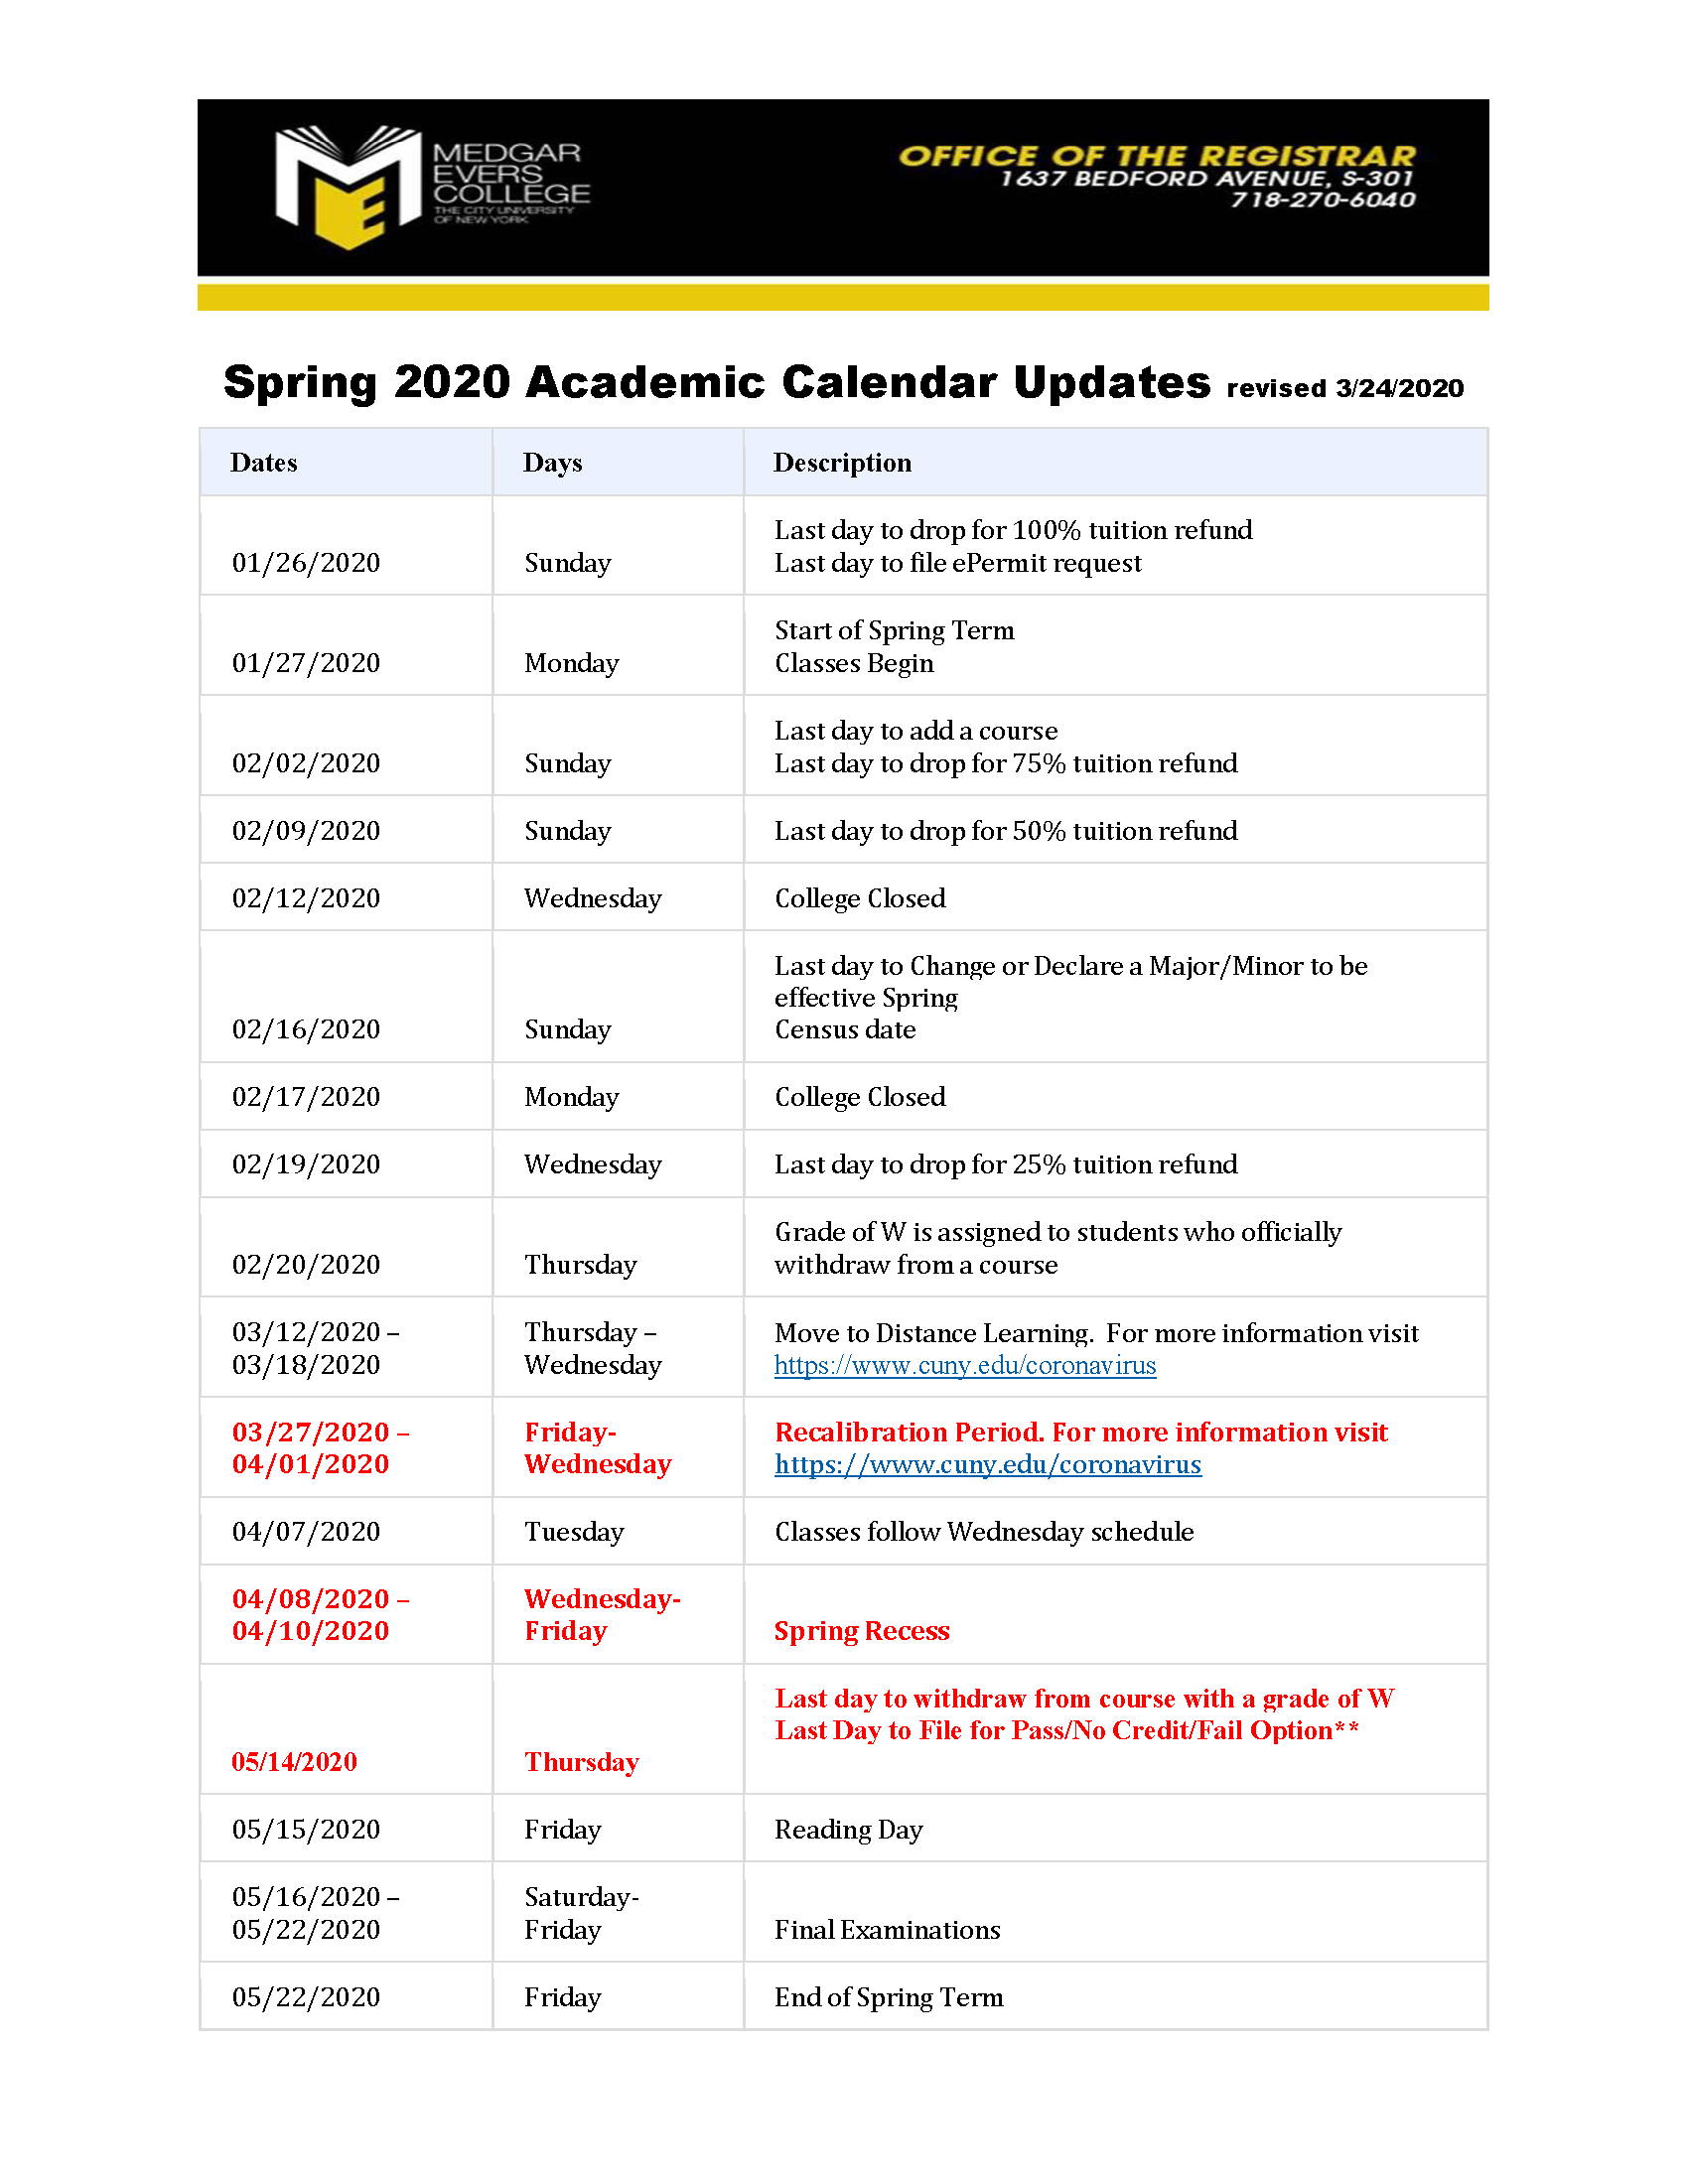 march-26-spring-2020-academic-calendar-updates-mec-covid-19-response